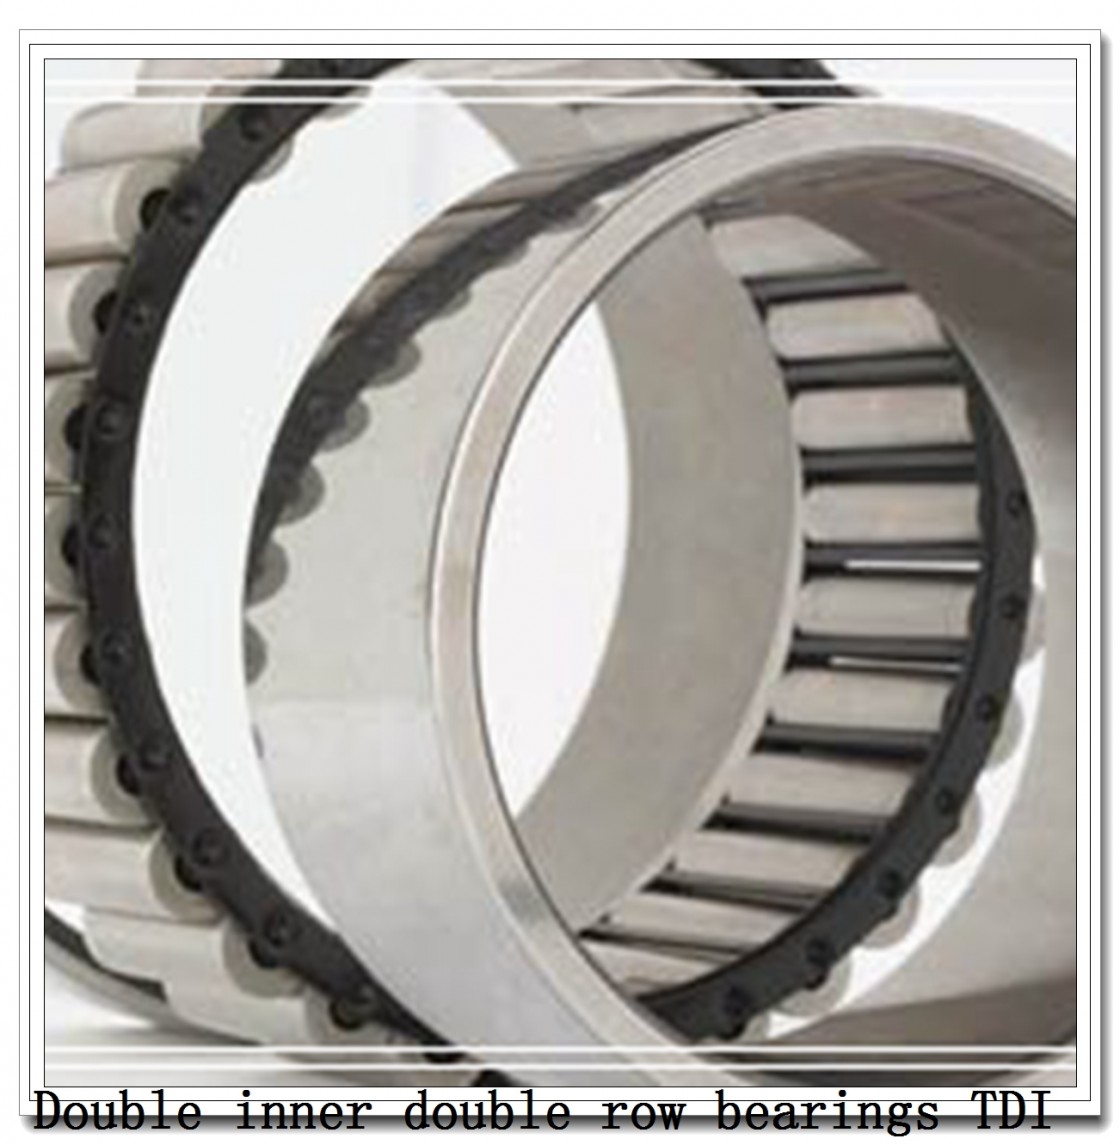 1180TDO1600-1 Double inner double row bearings TDI